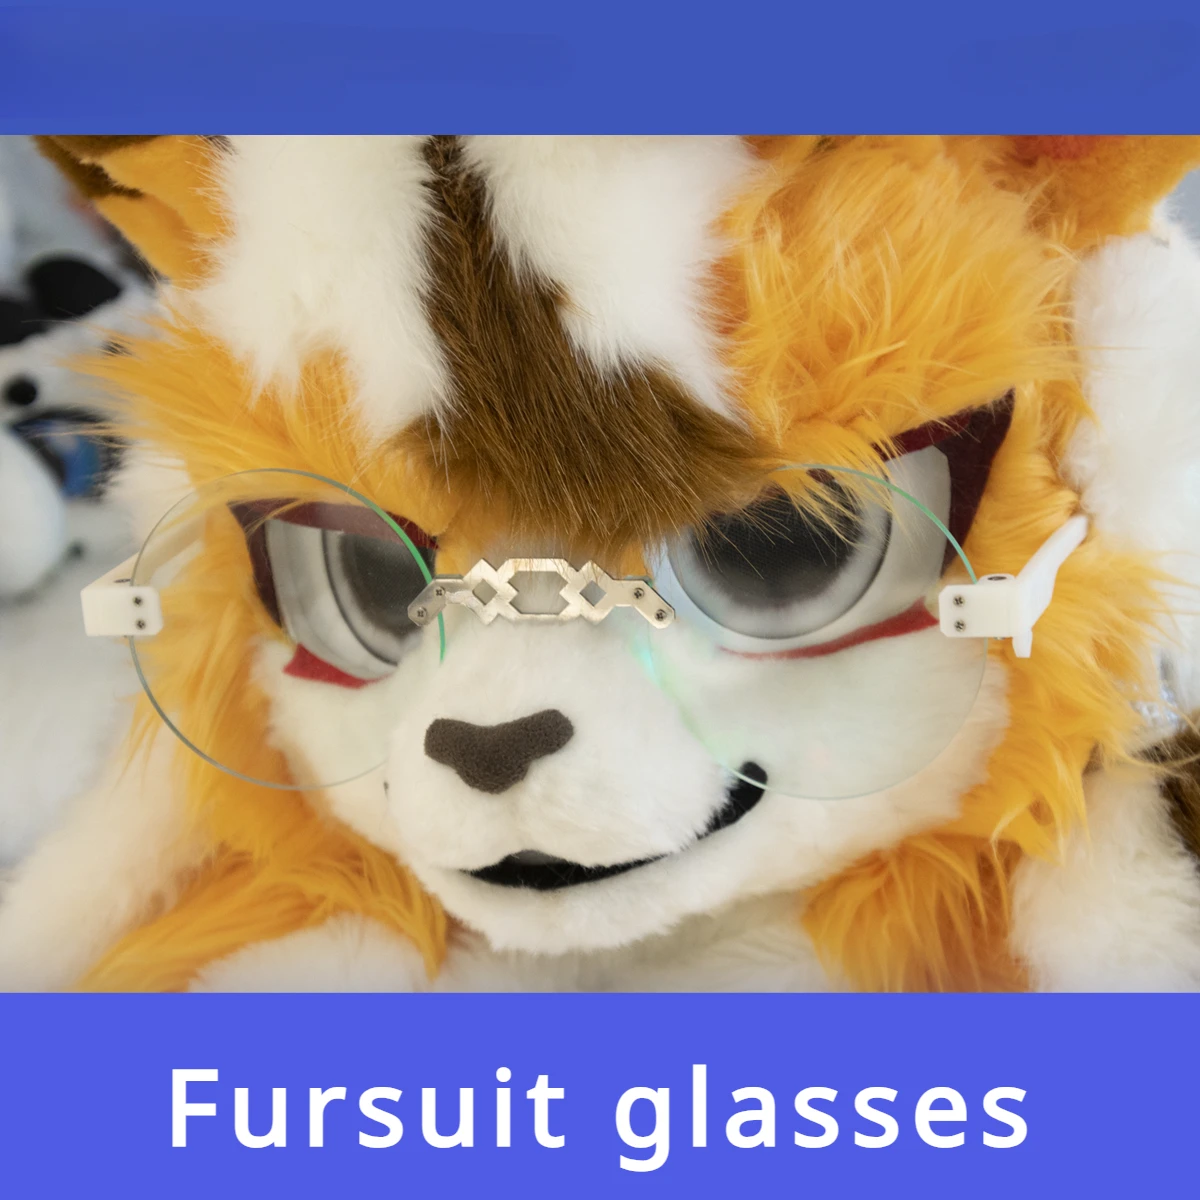 

Fursuit Glasses Kigurumi Headsets Eyewear Furry Rubbit Doll Cat Animal Heads Wearable Kig Headsets Animal Costumes Accessories